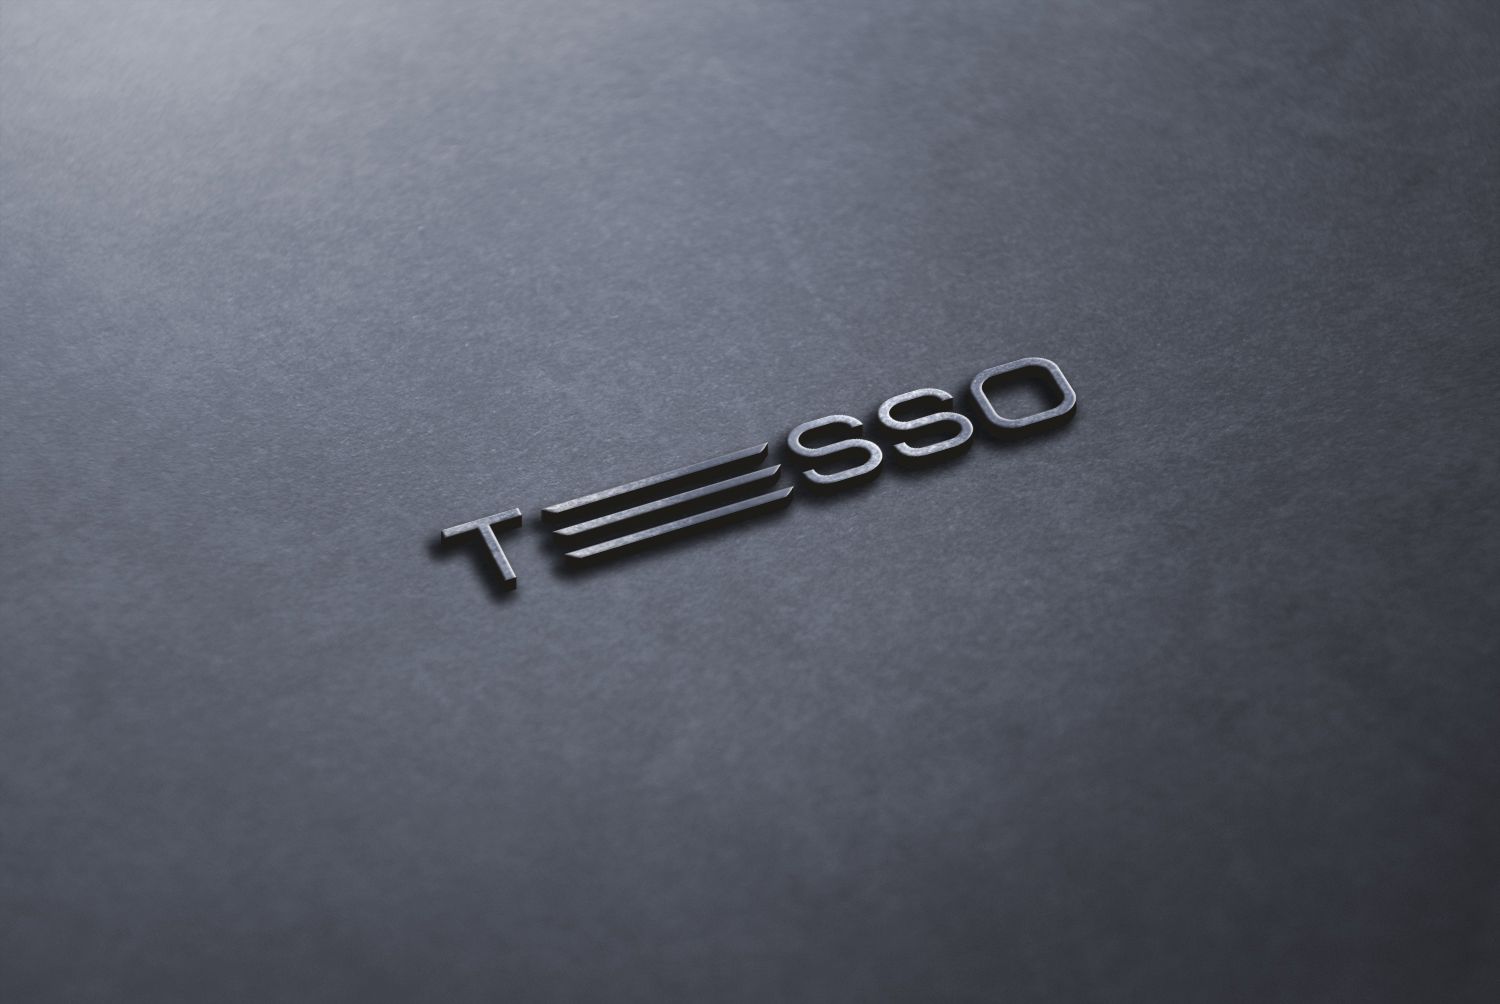 Логотип для TESSO - дизайнер U4po4mak